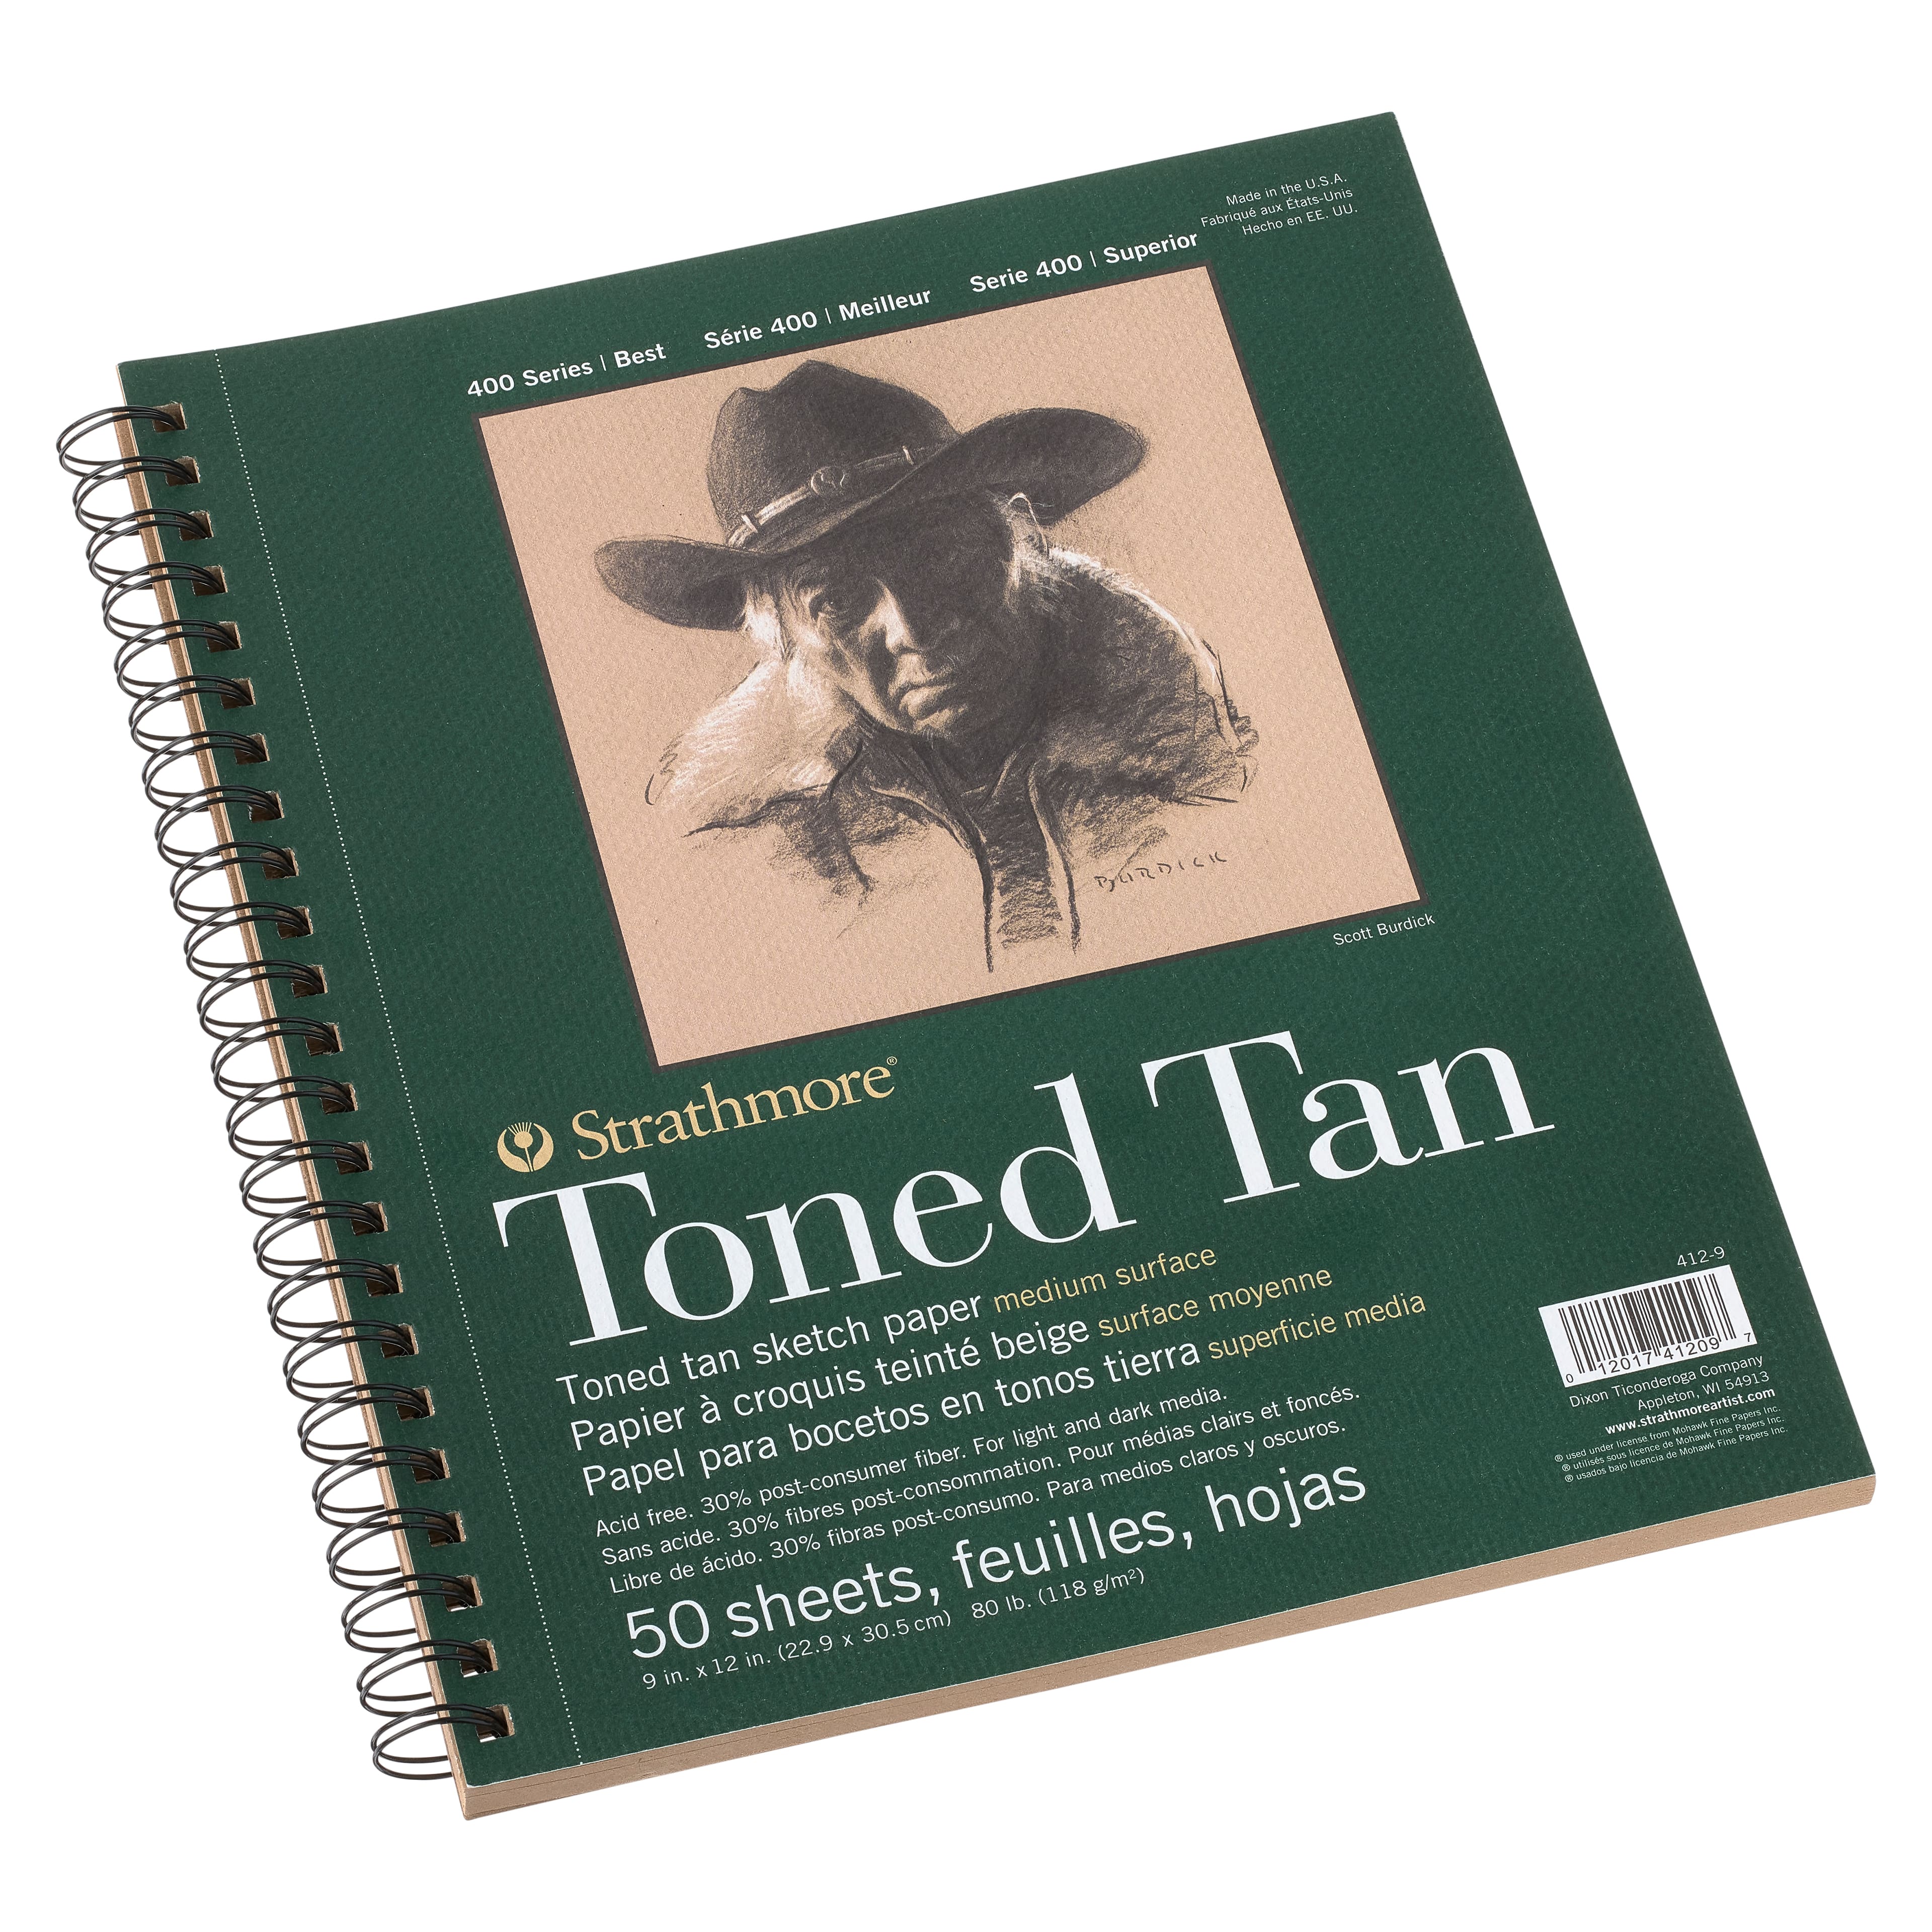 Pen drawing in toned tan sketchbook.